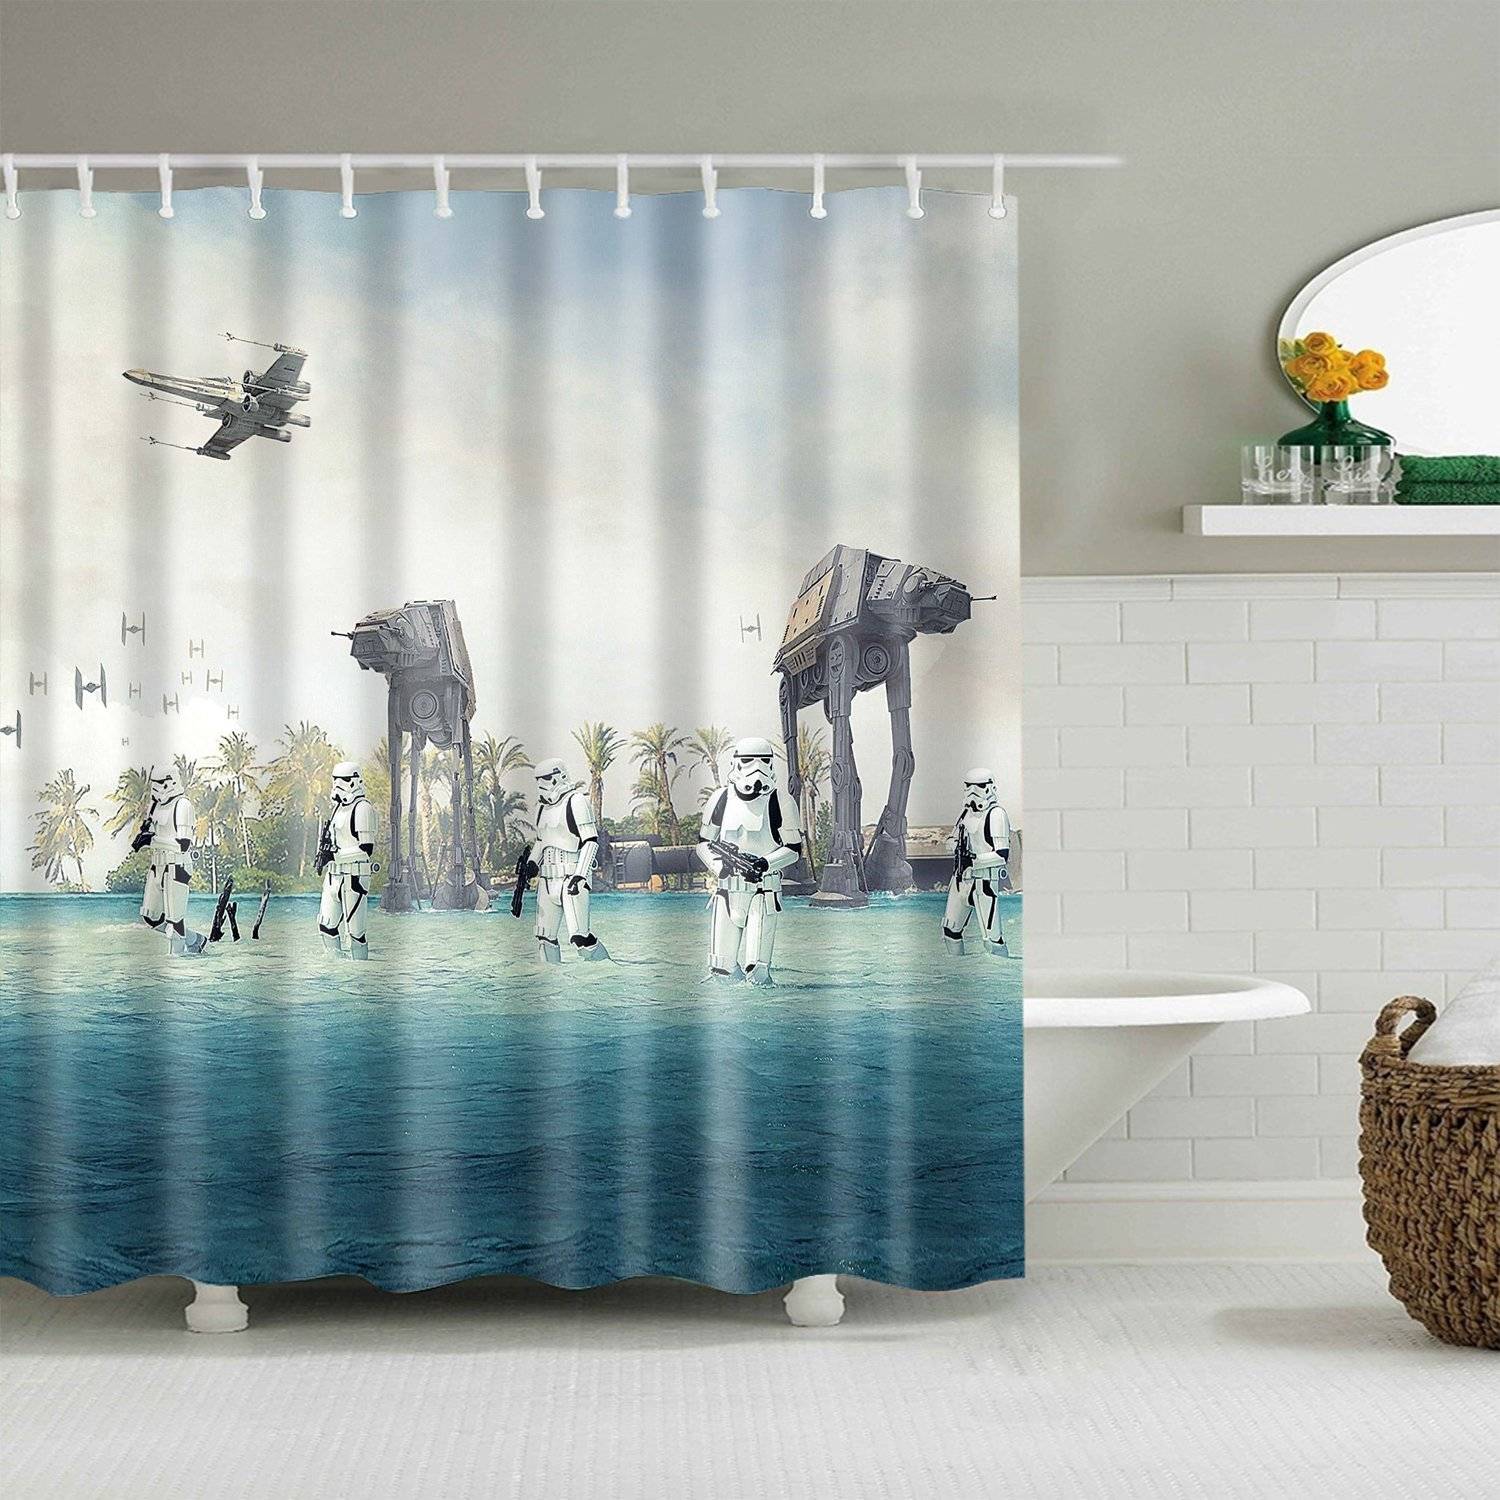 Star Alien Wars 3D Printed Shower Curtain Bathroom Curtains